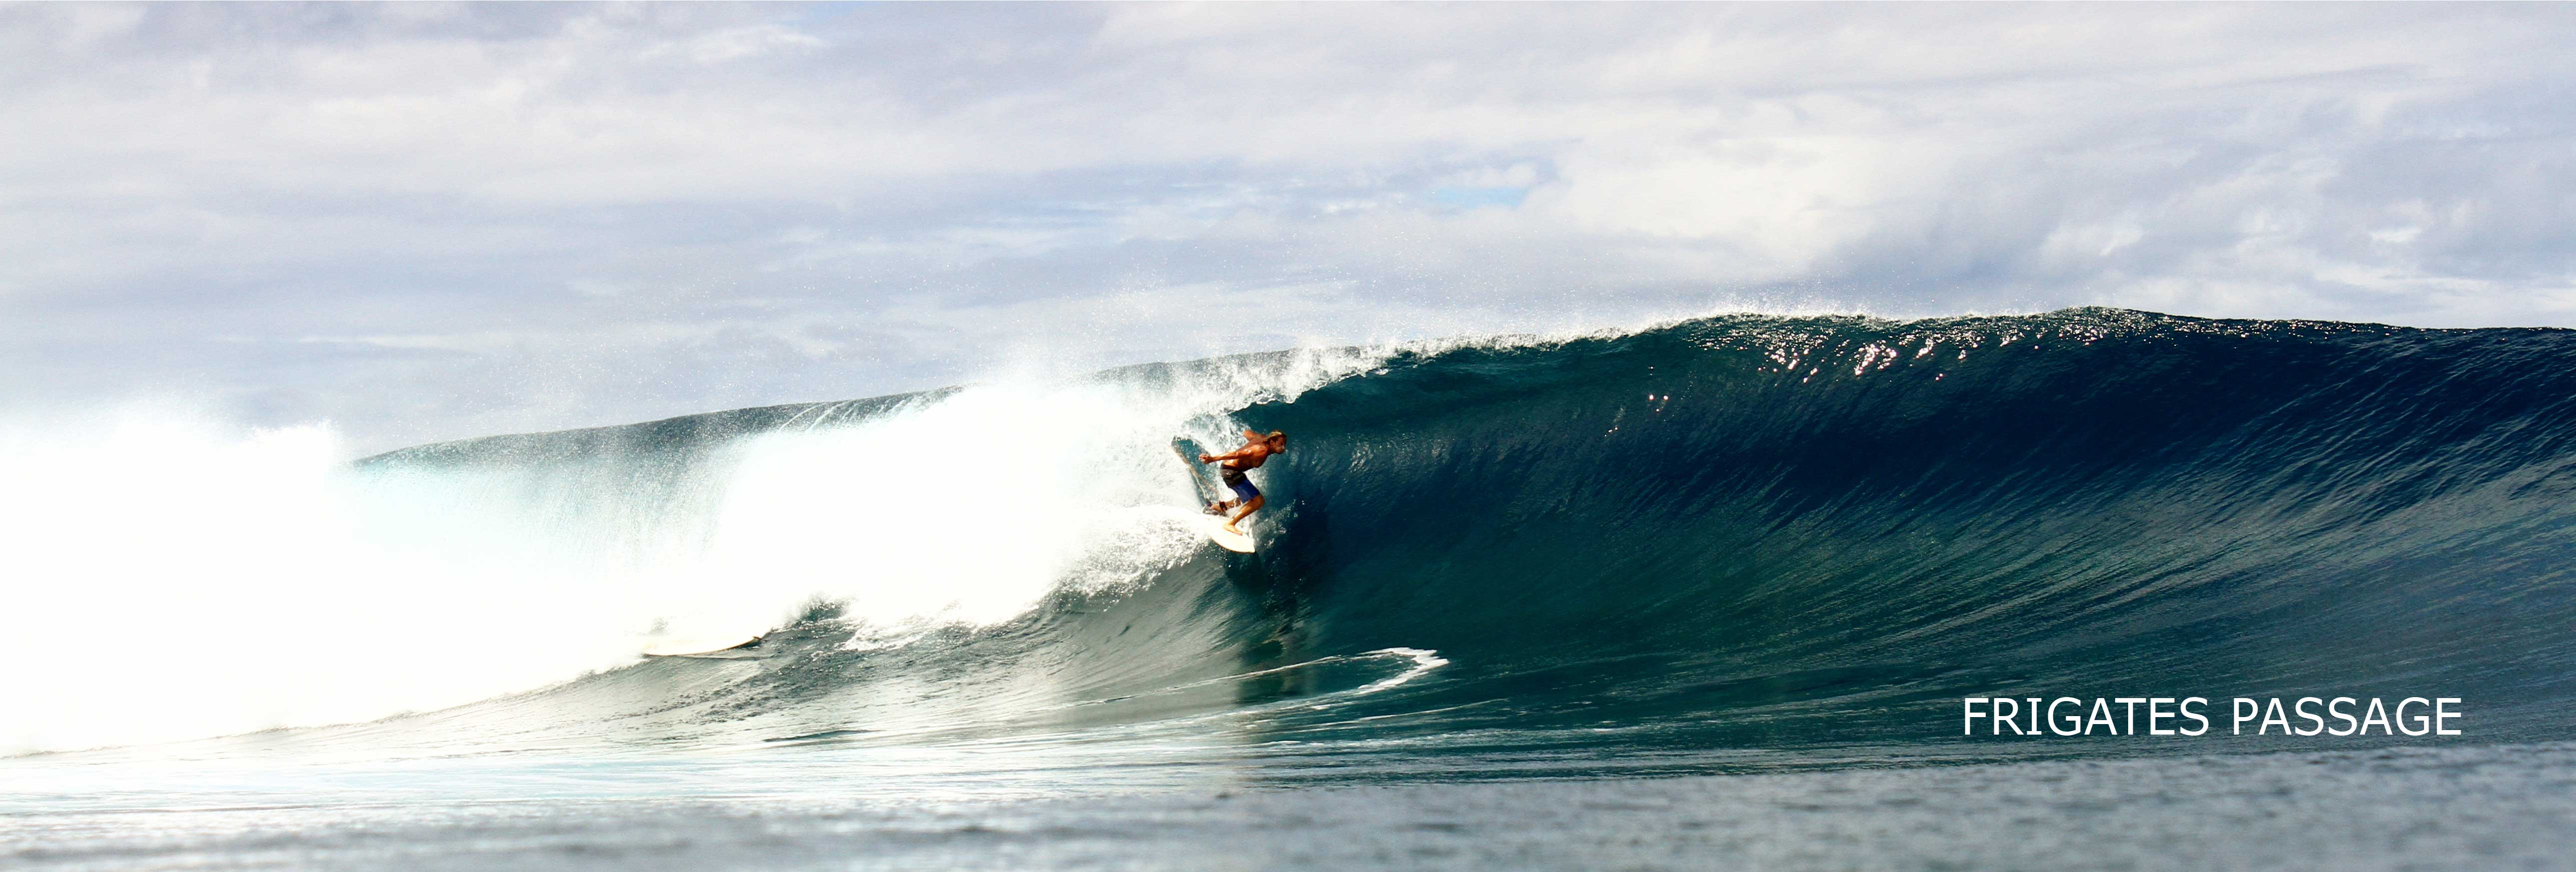 Fiji Surfing Frigates Passage - Waidroka Bay Resort